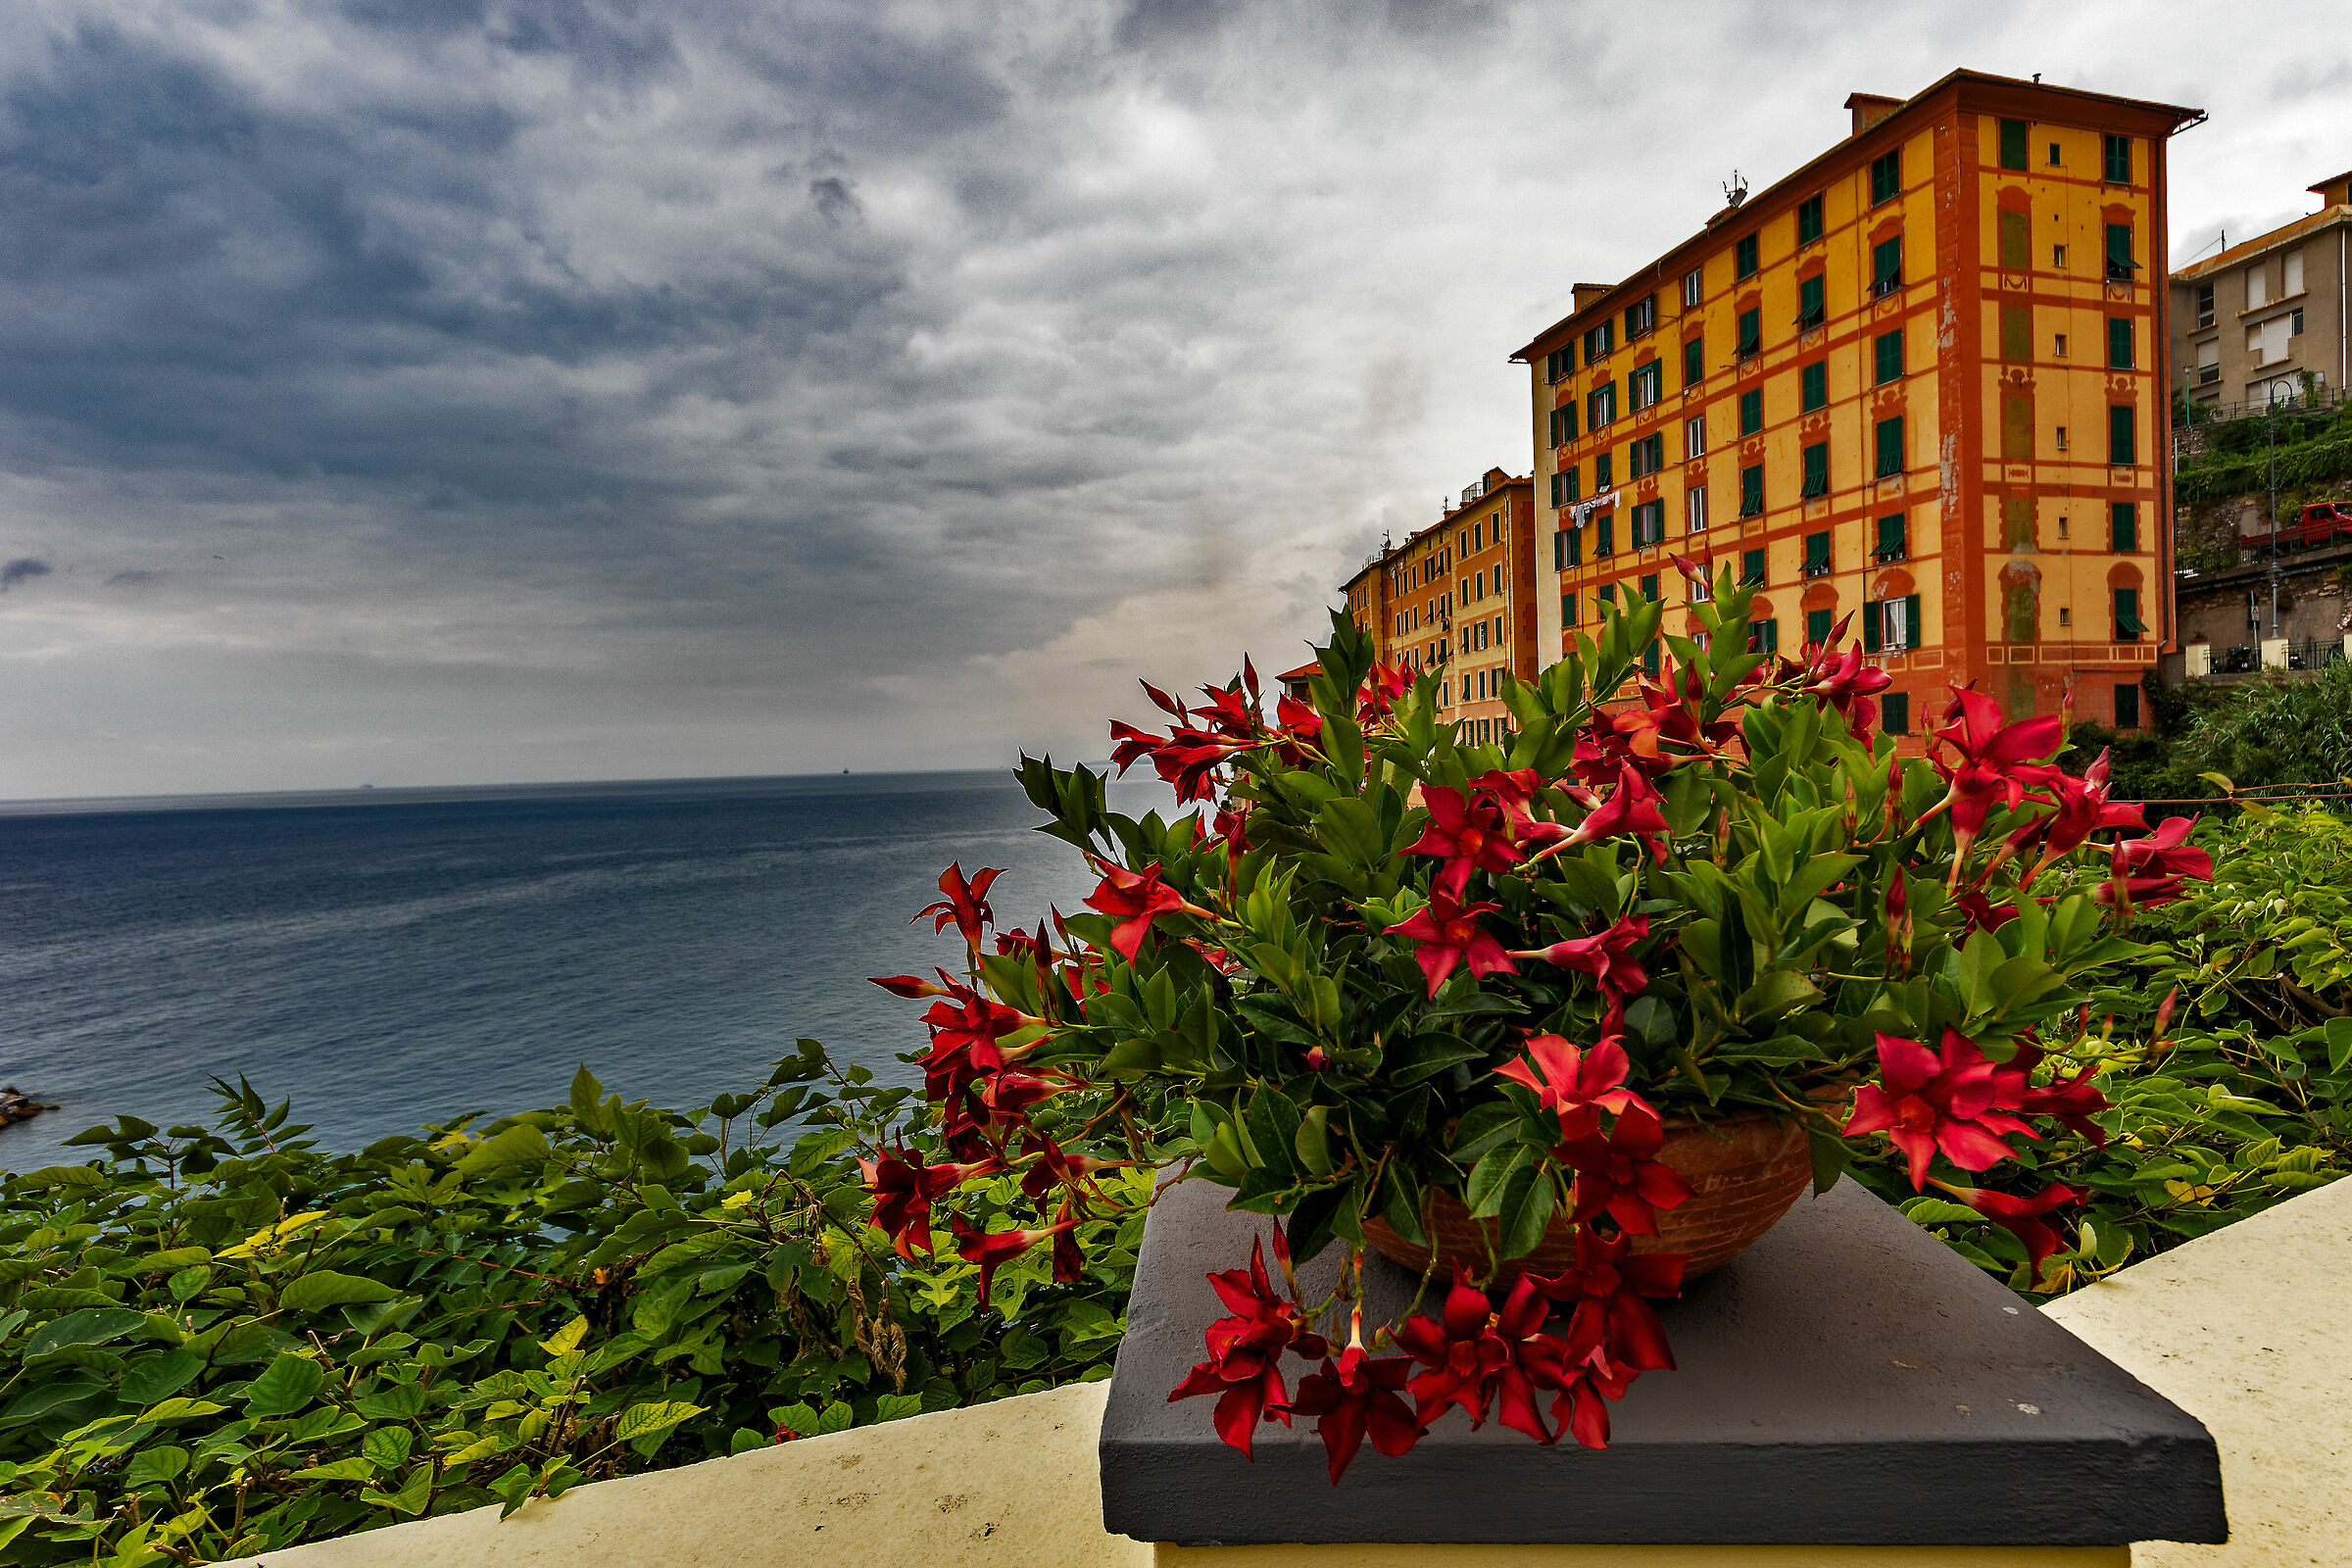 Liguria land of contrasts...